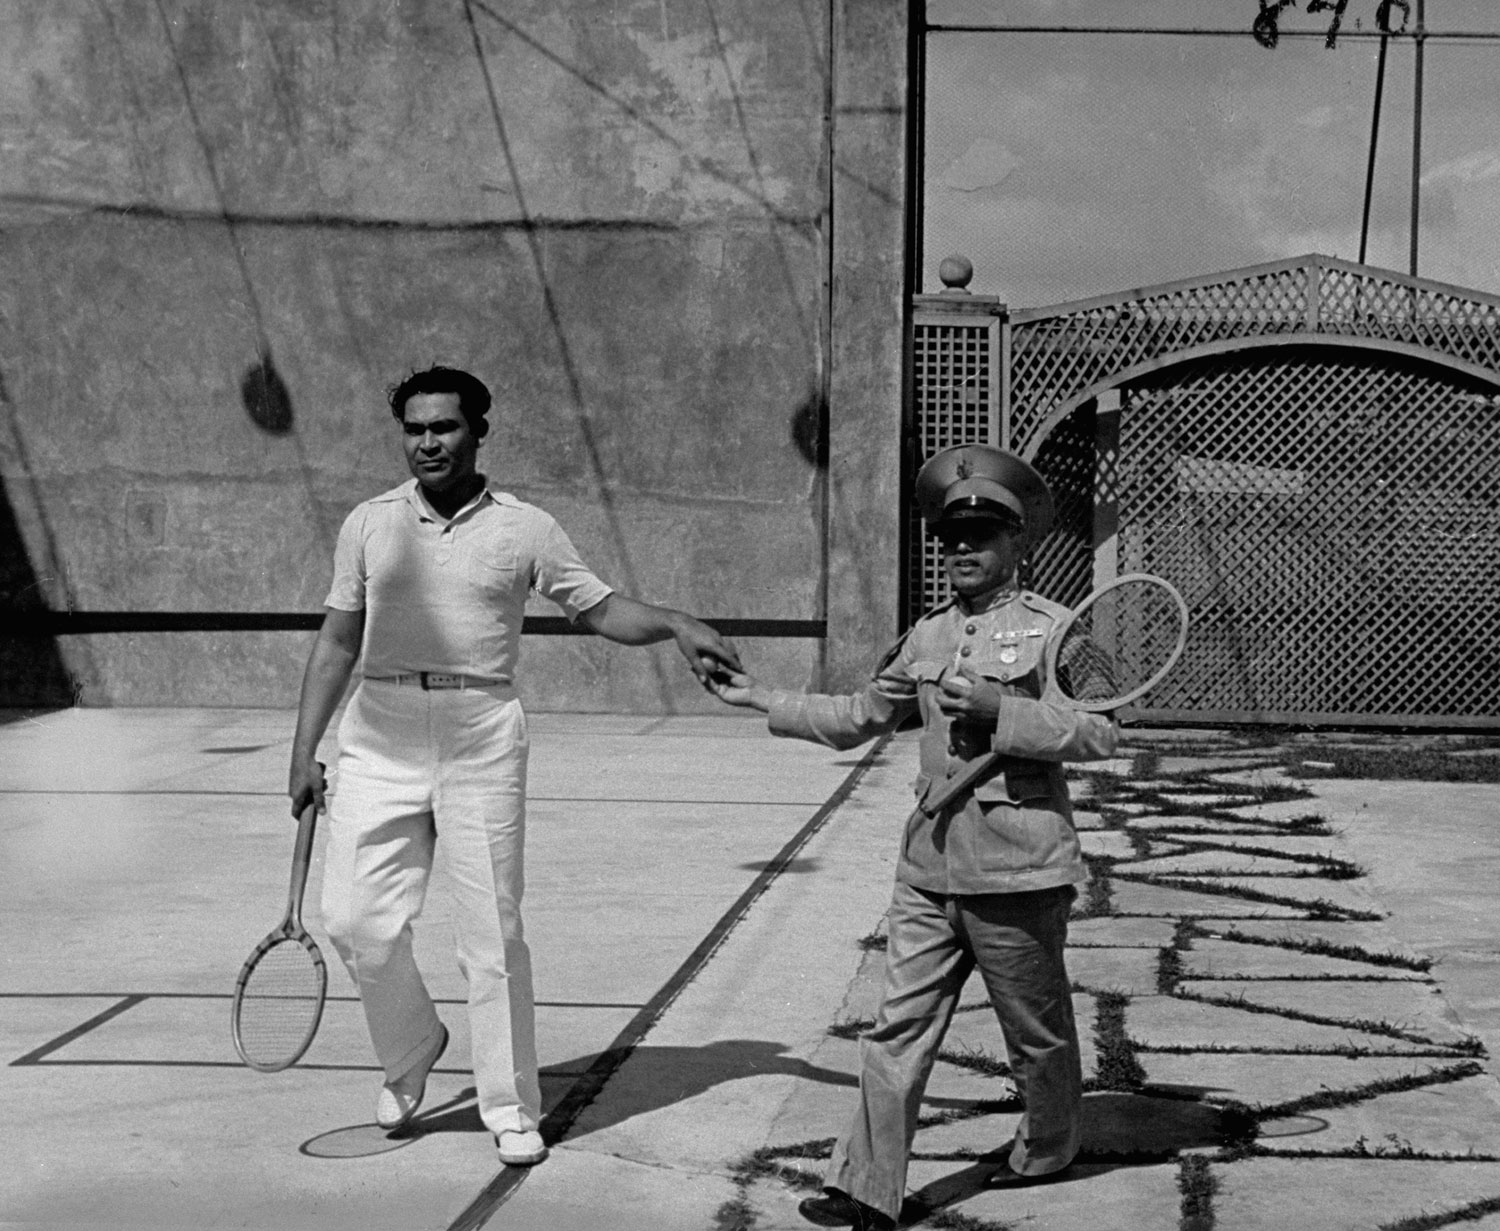 An aide hands Col. Fulgencio Batista, future president and dictator of Cuba, a tennis ball in 1938 Cuba.